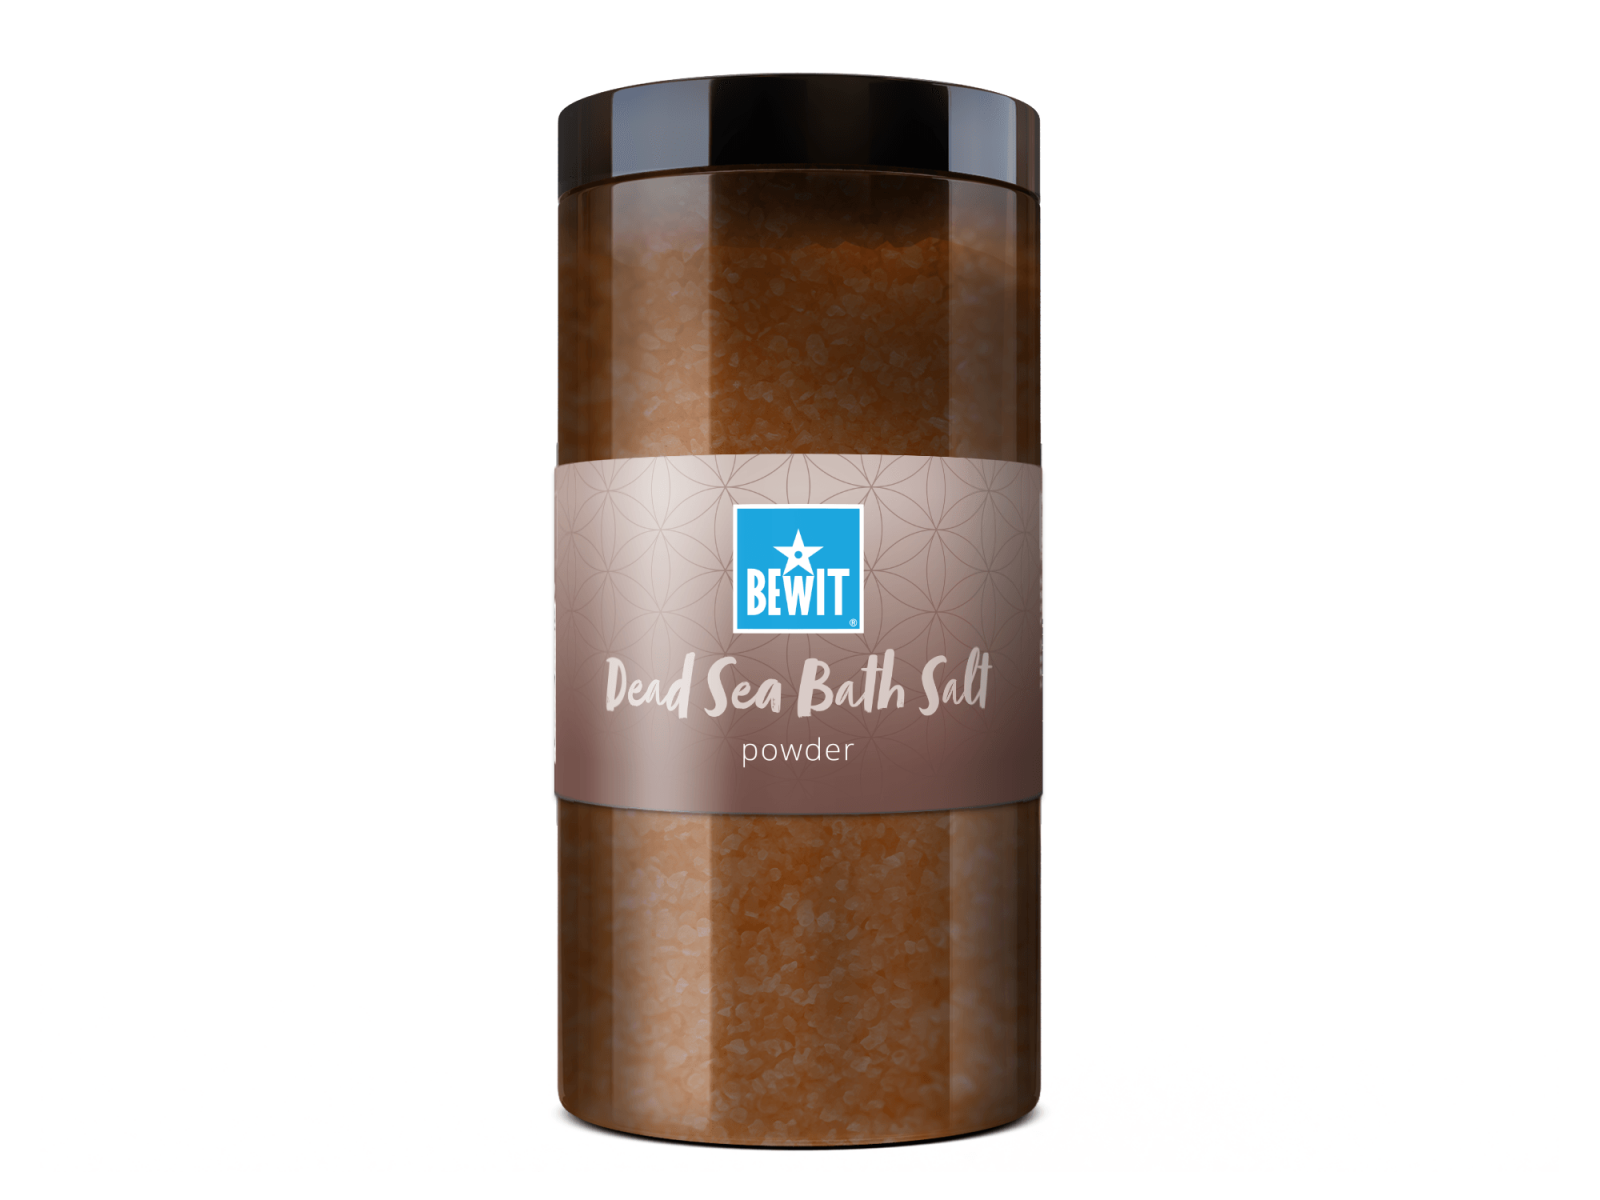 BEWIT Dead Sea salt, powdered - Holistic cosmetics - 3